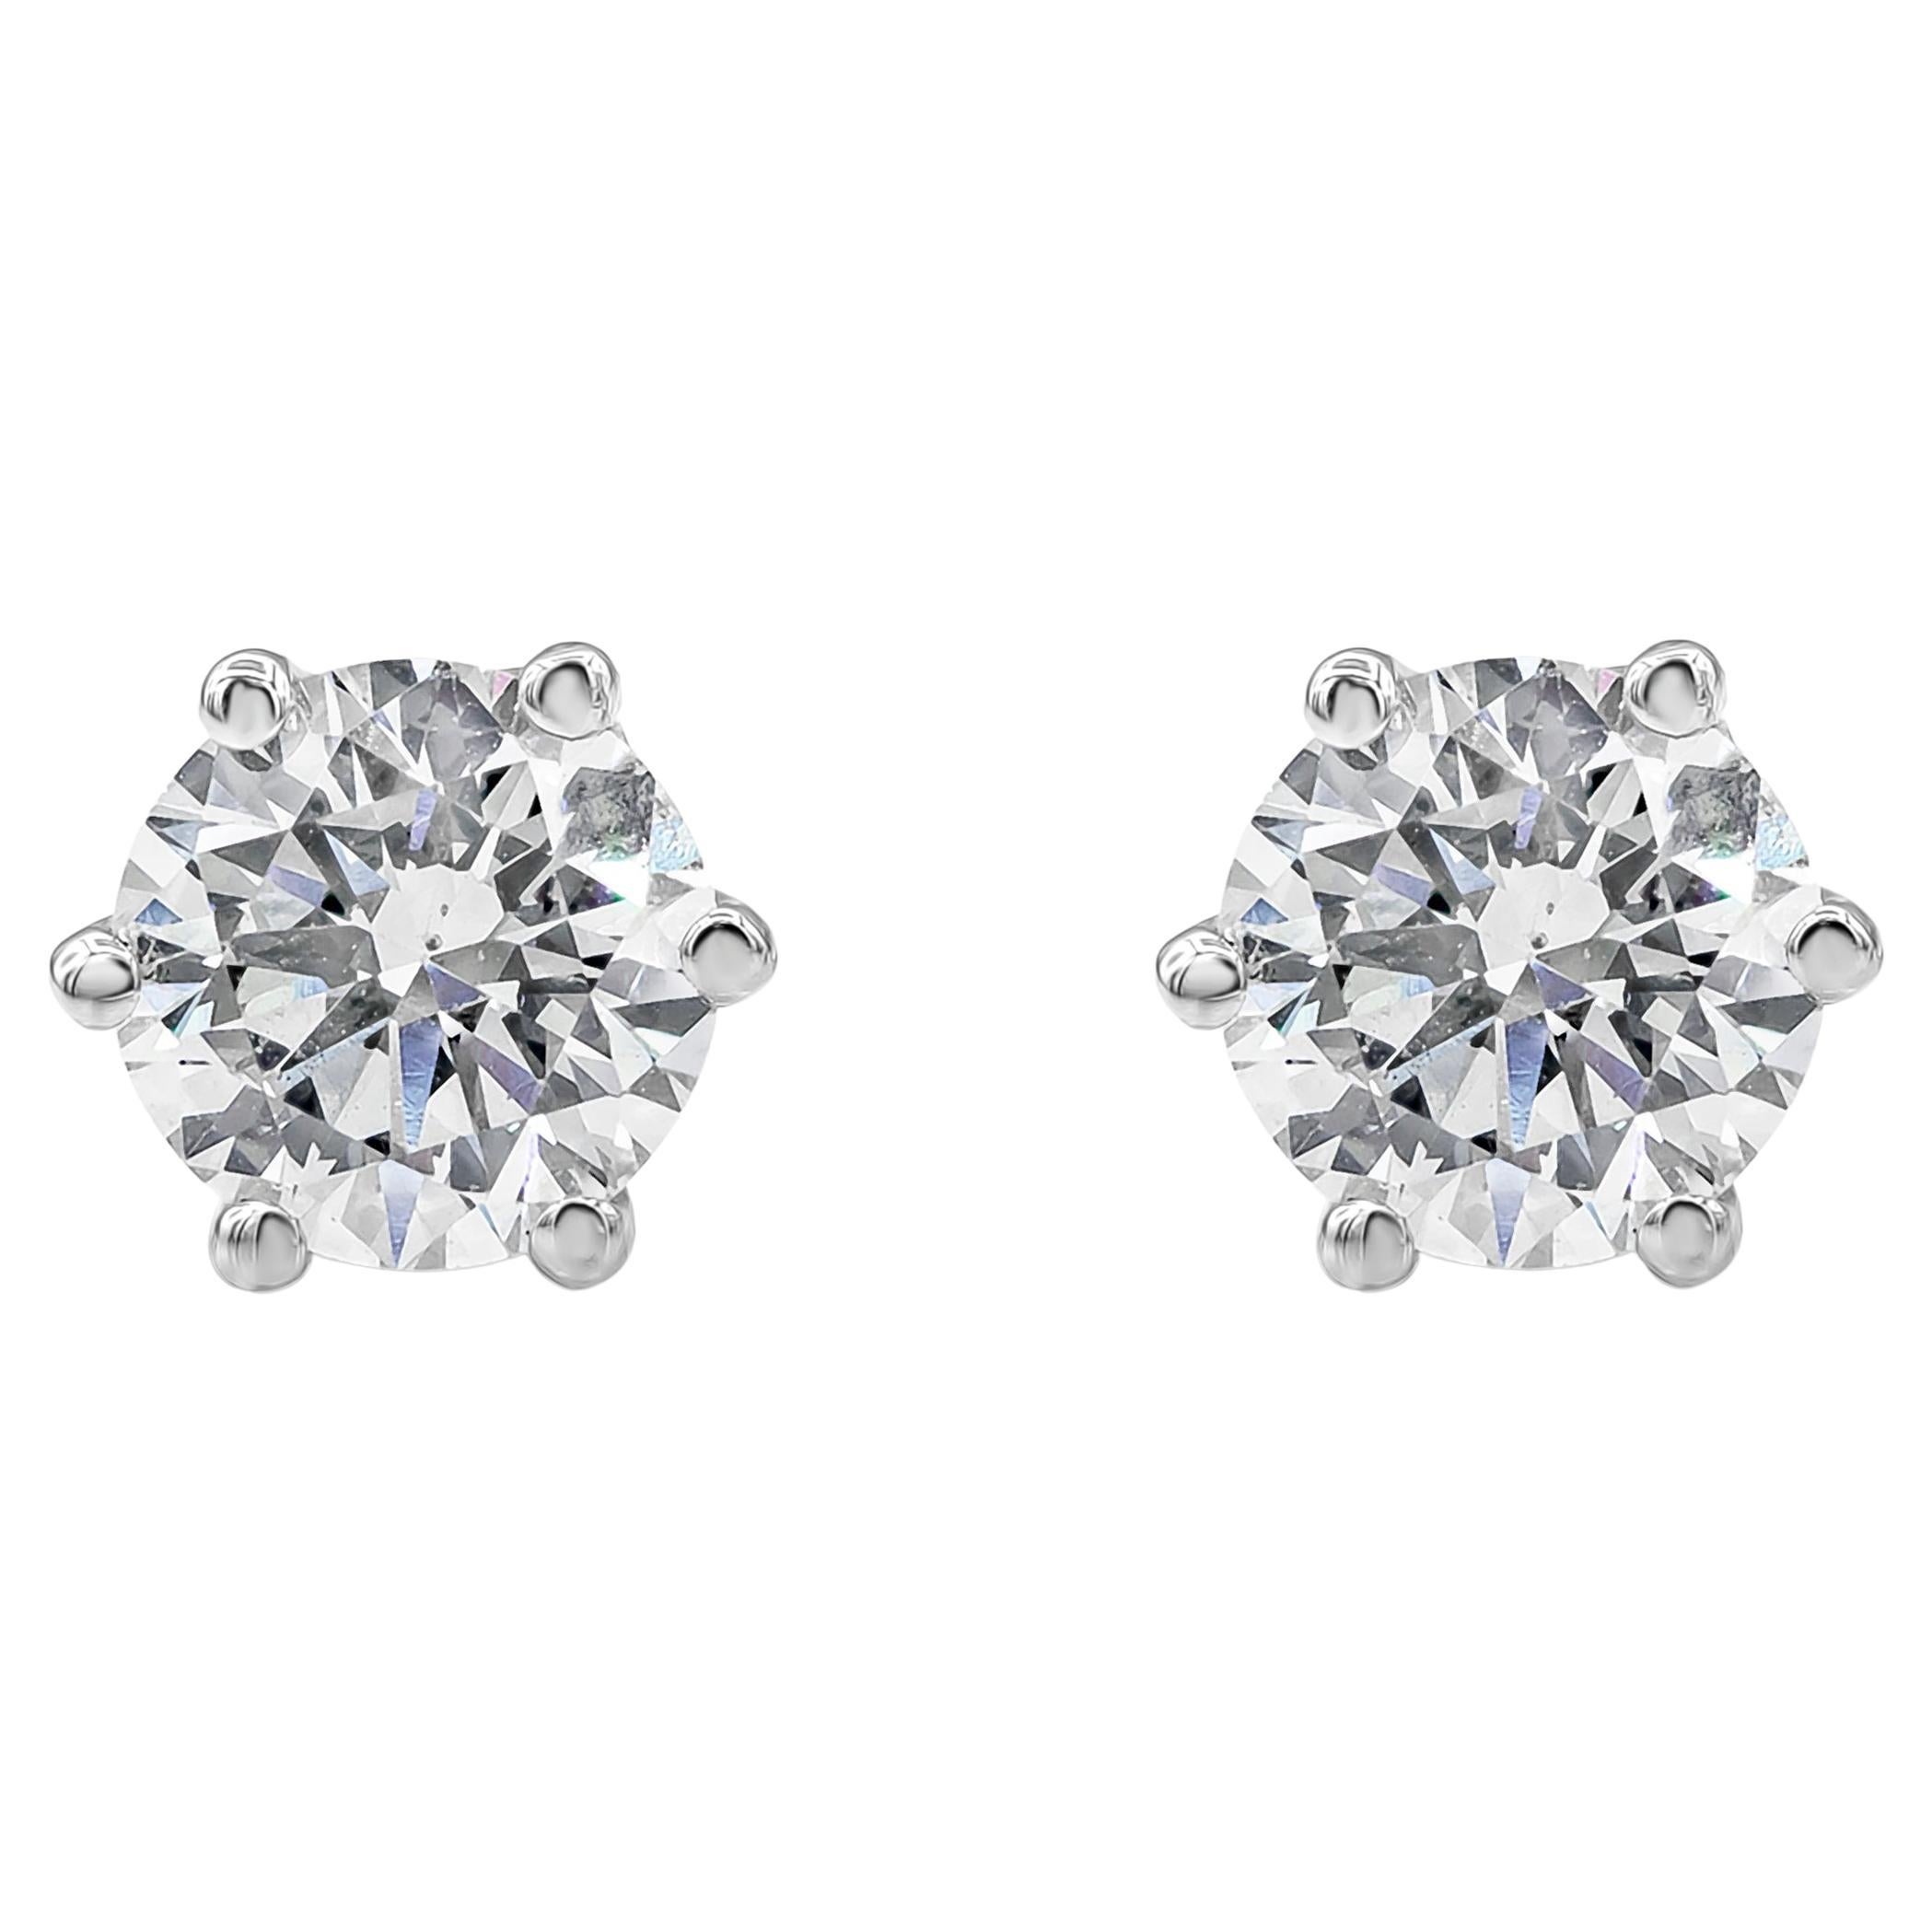 Roman Malakov 0.75 Carats Total Brilliant Round Shape Diamond Stud Earrings